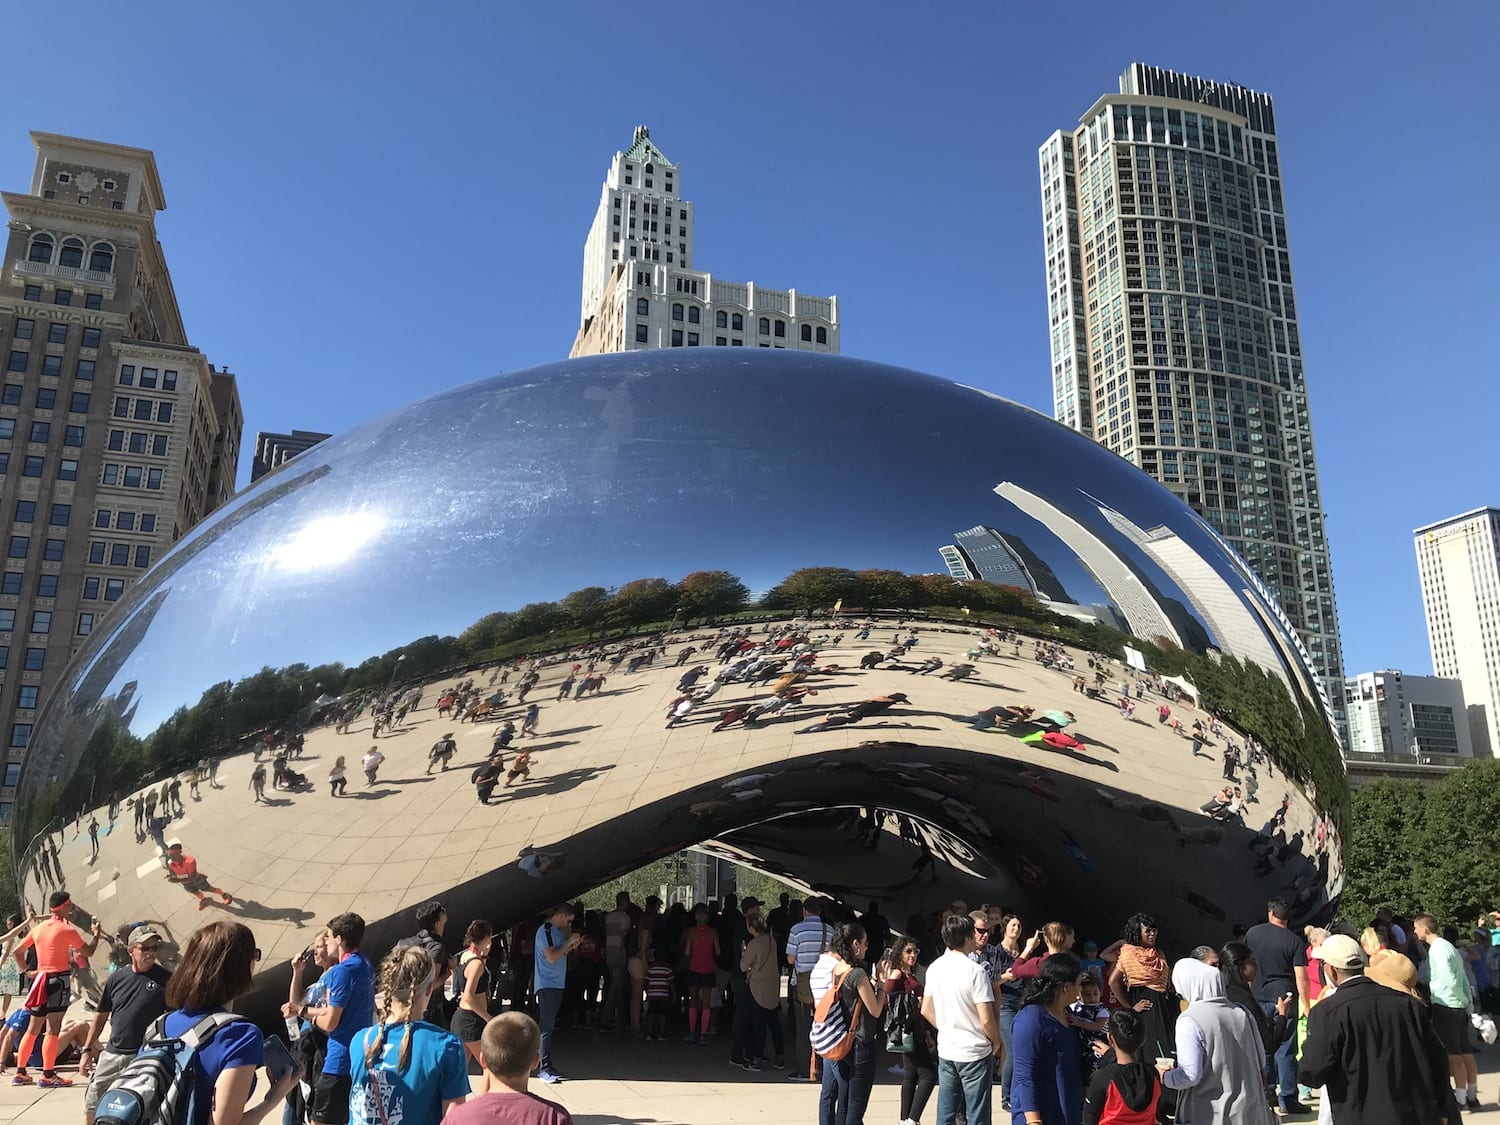 Bean Sculpture Cloud Gate Chicago Illinois